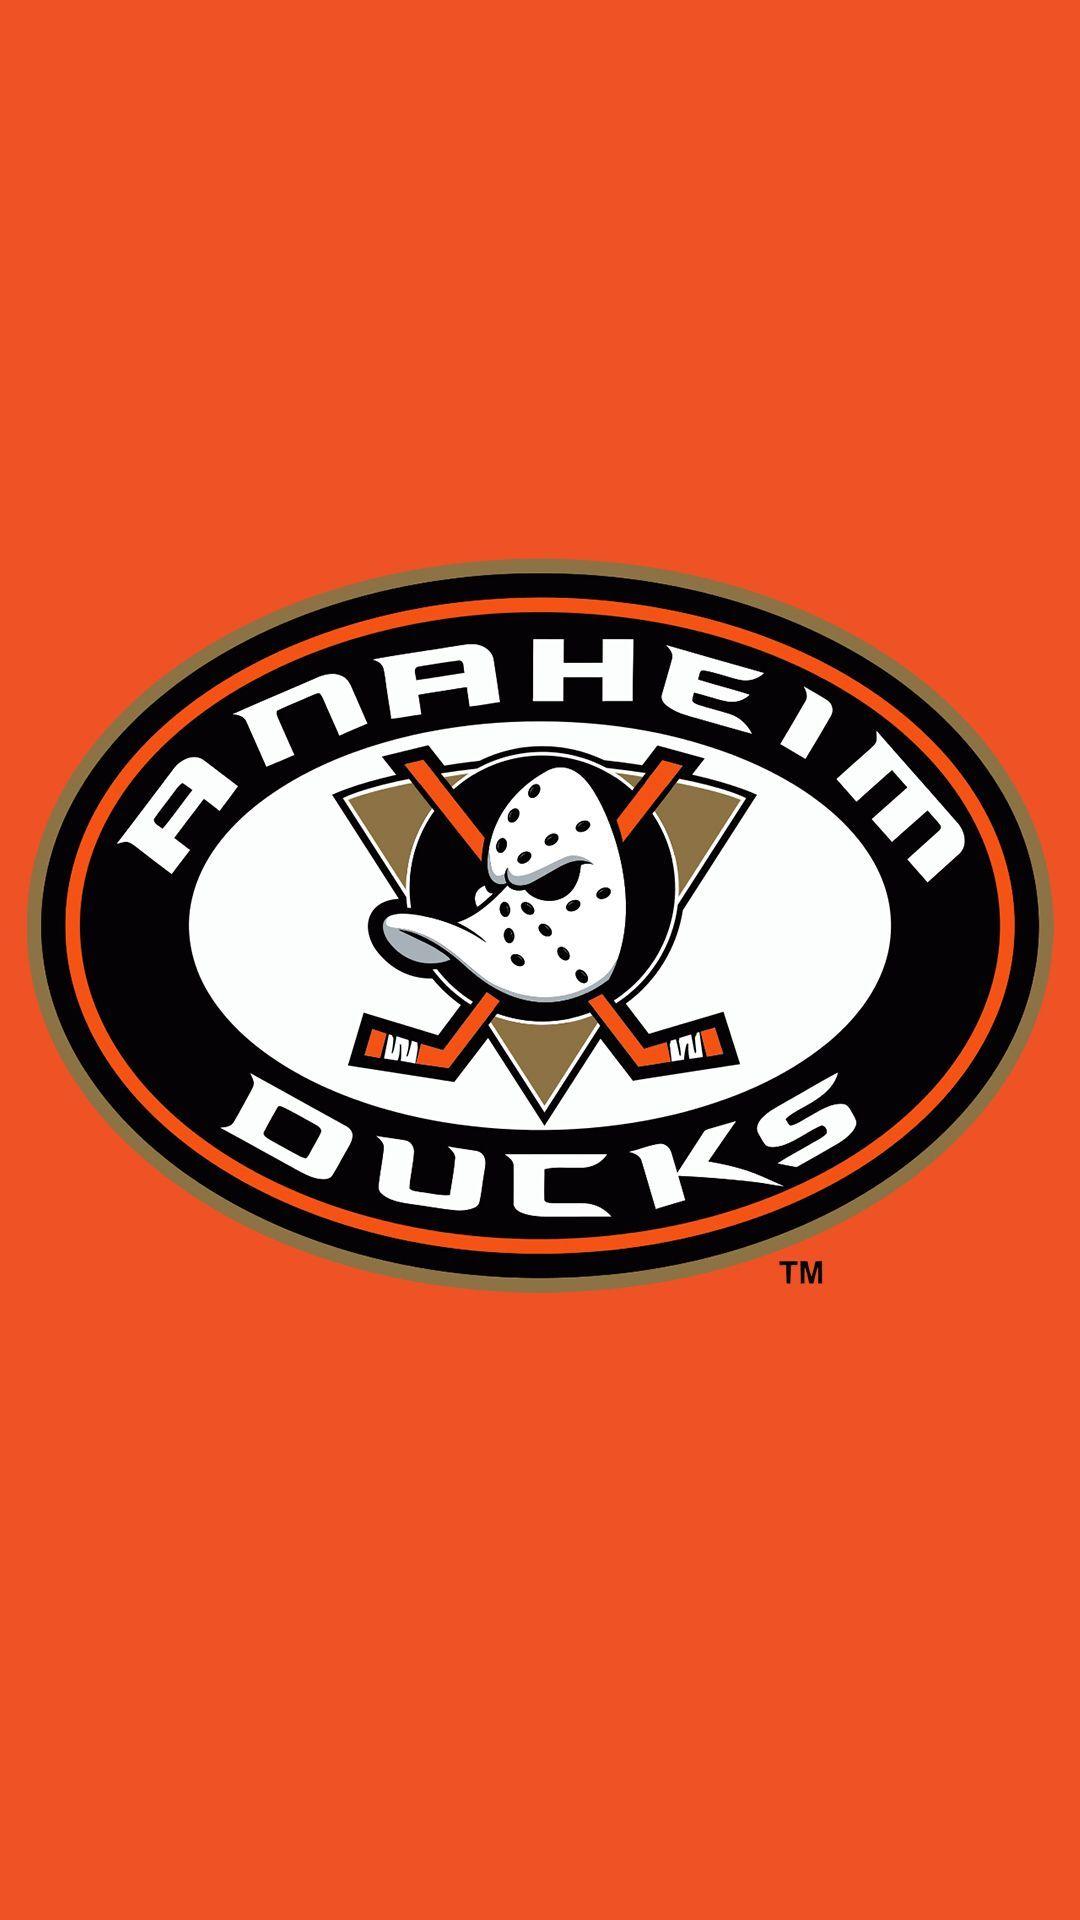 Anaheim Ducks Logo - Anaheim Ducks iPhone 6 plus wallpaper created by me | iPhone 6 plus ...